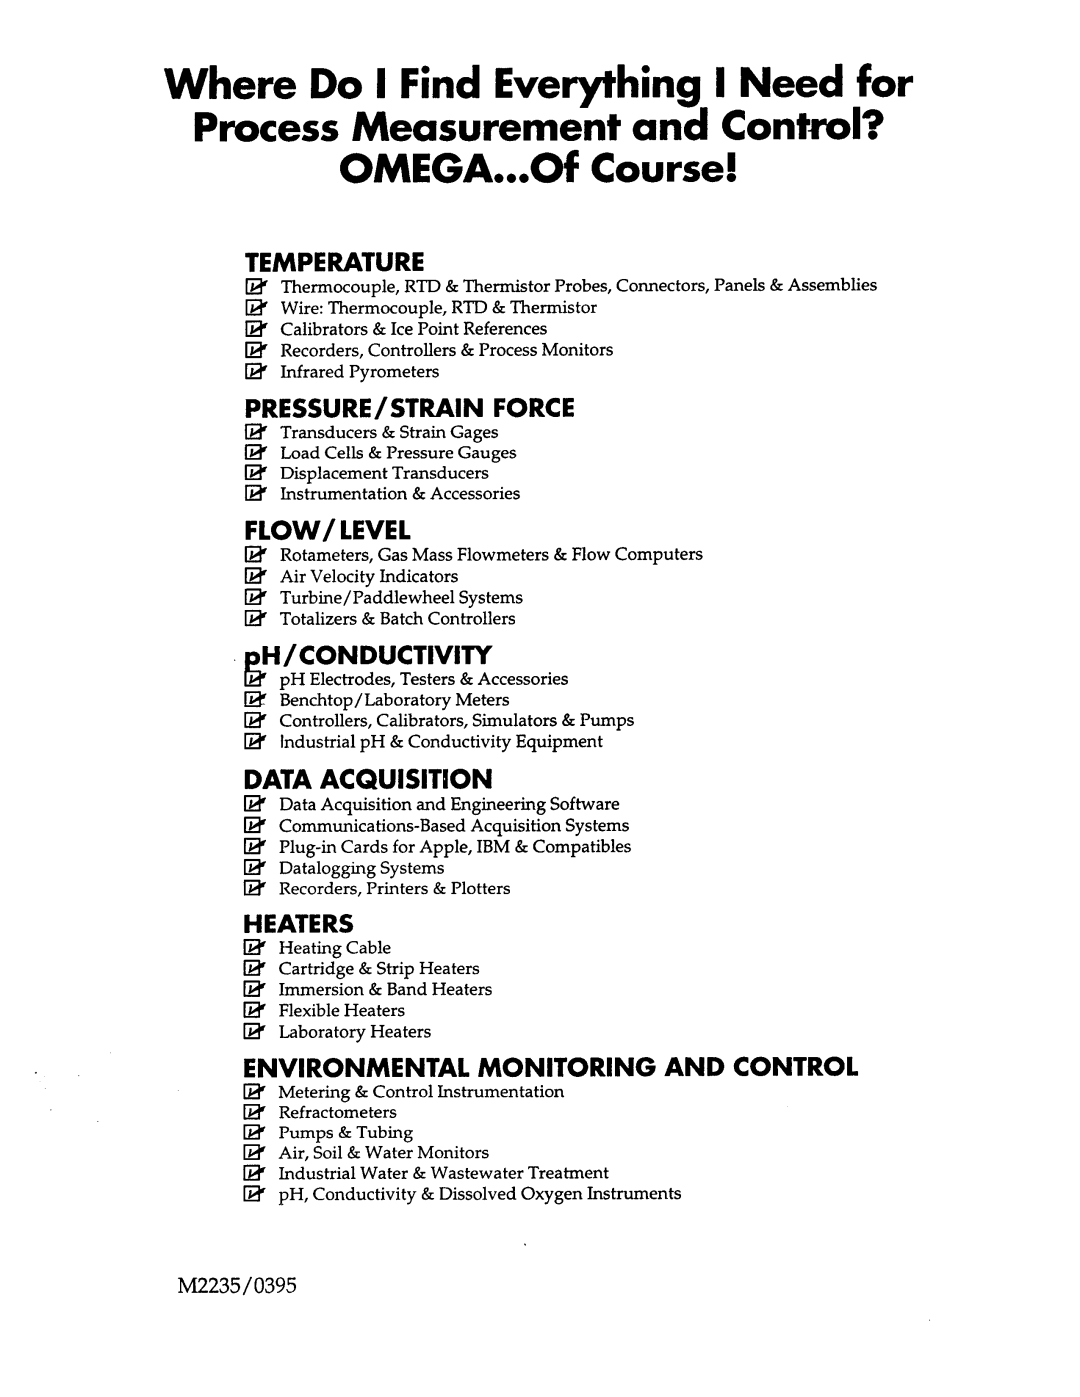 Omega RG-2501 manual Temperature, Pressure/Strain Force, Flow/ Level, H/Conductivity, DATA ACQUlSlTlON, Heaters 